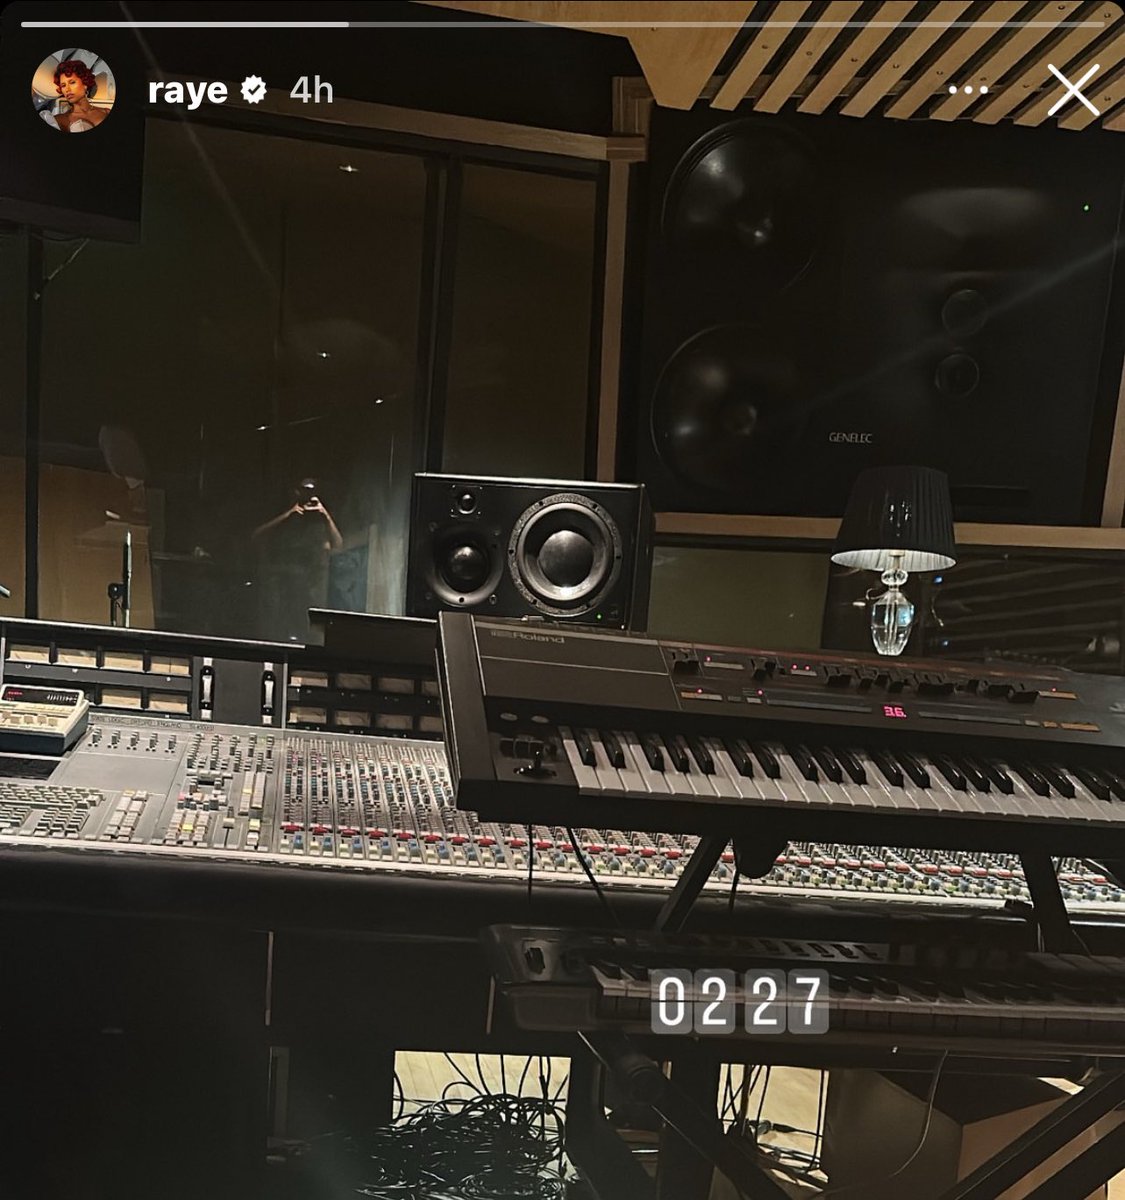 Raye is back in the studio. 👀